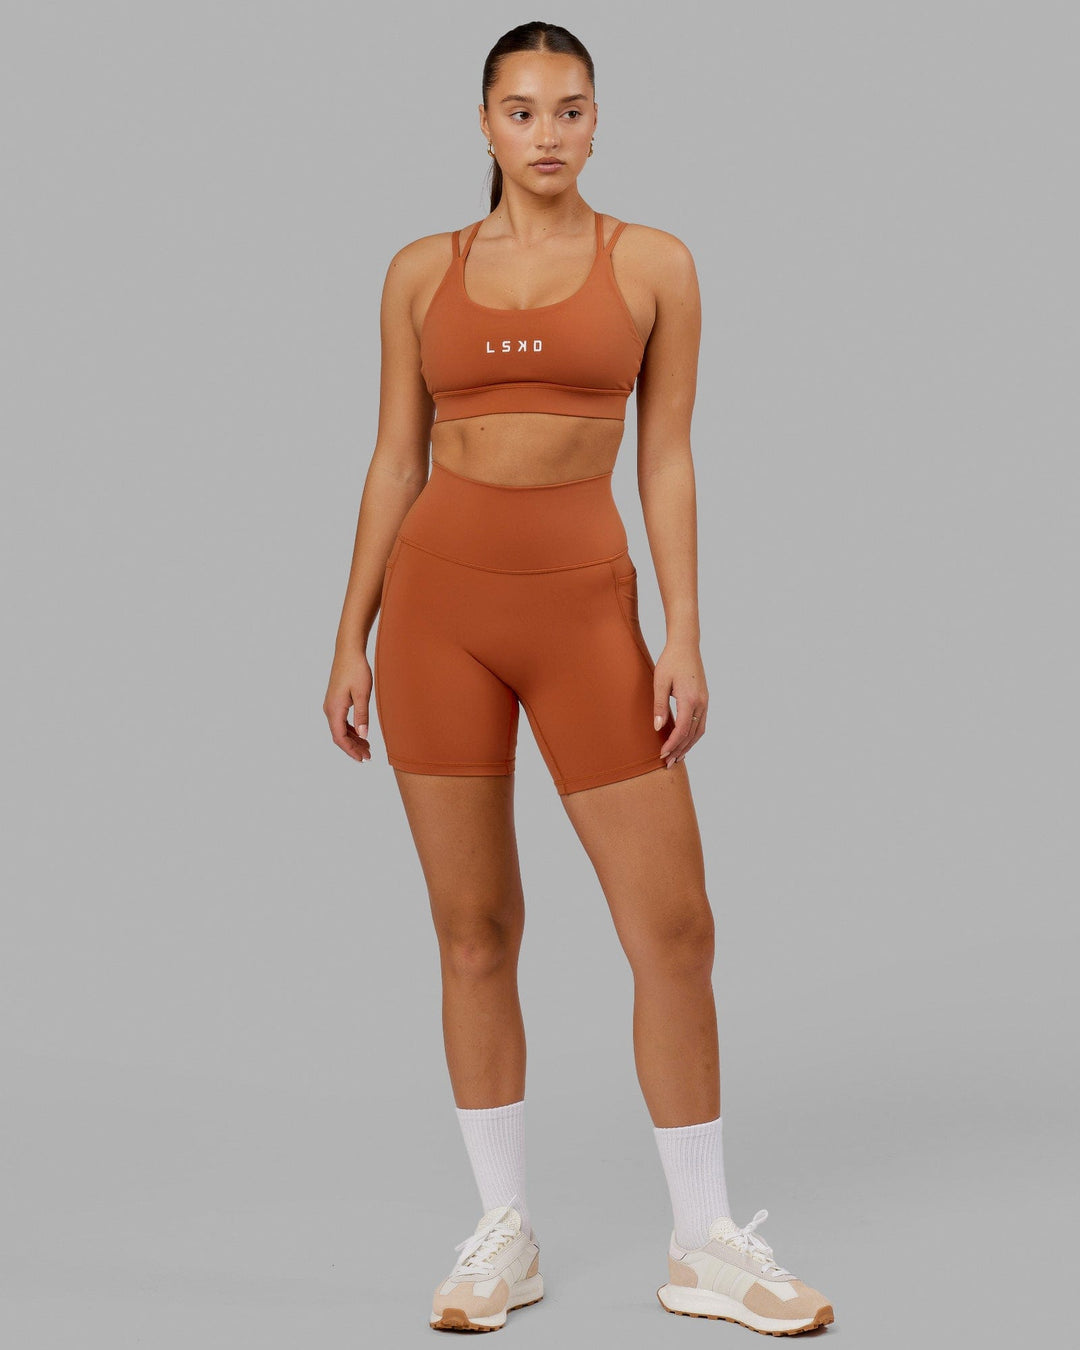 Fusion Mid-Length Shorts - Auburn